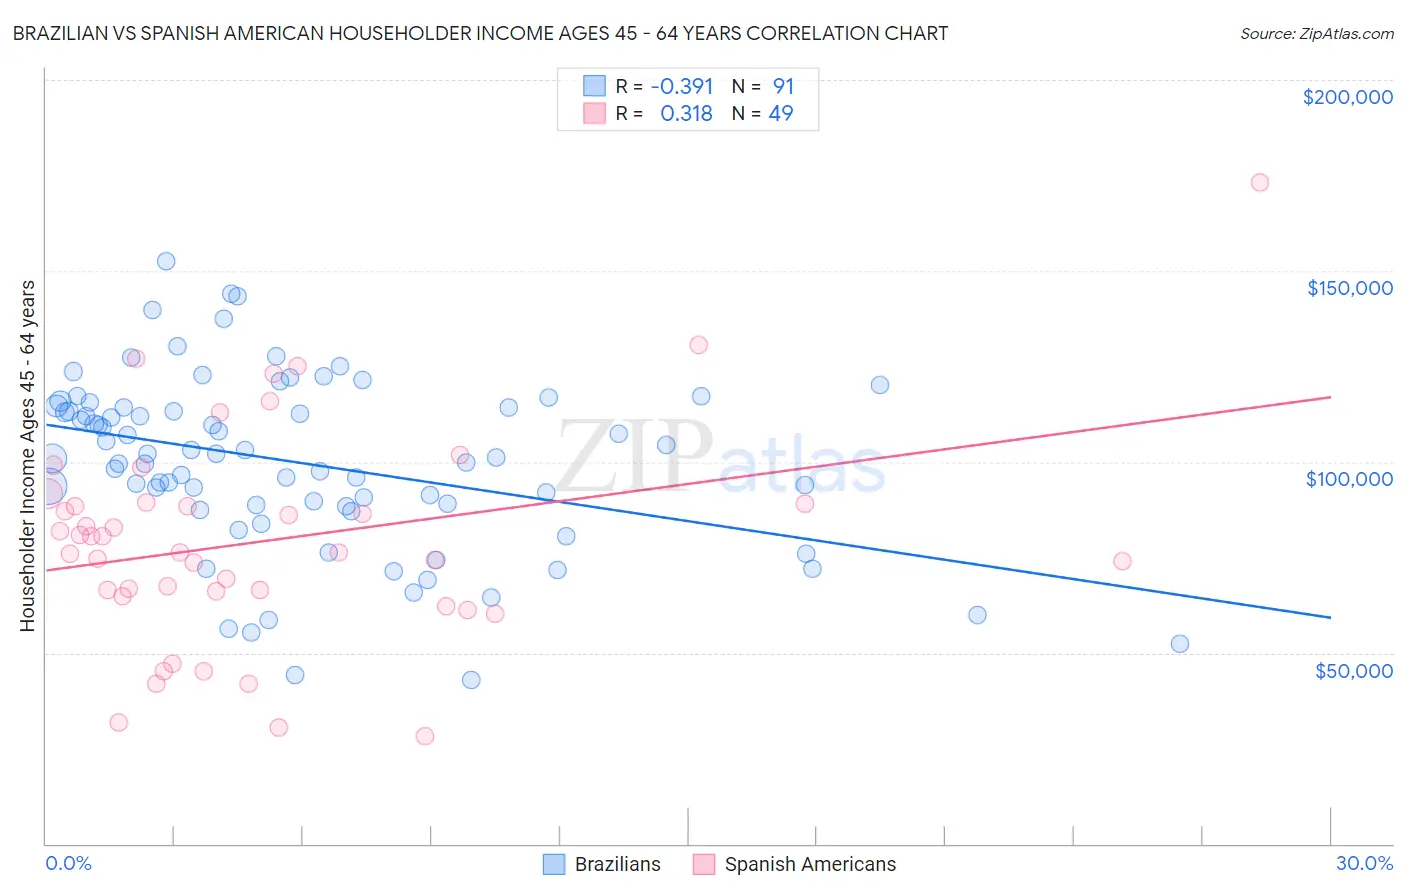 Brazilian vs Spanish American Householder Income Ages 45 - 64 years